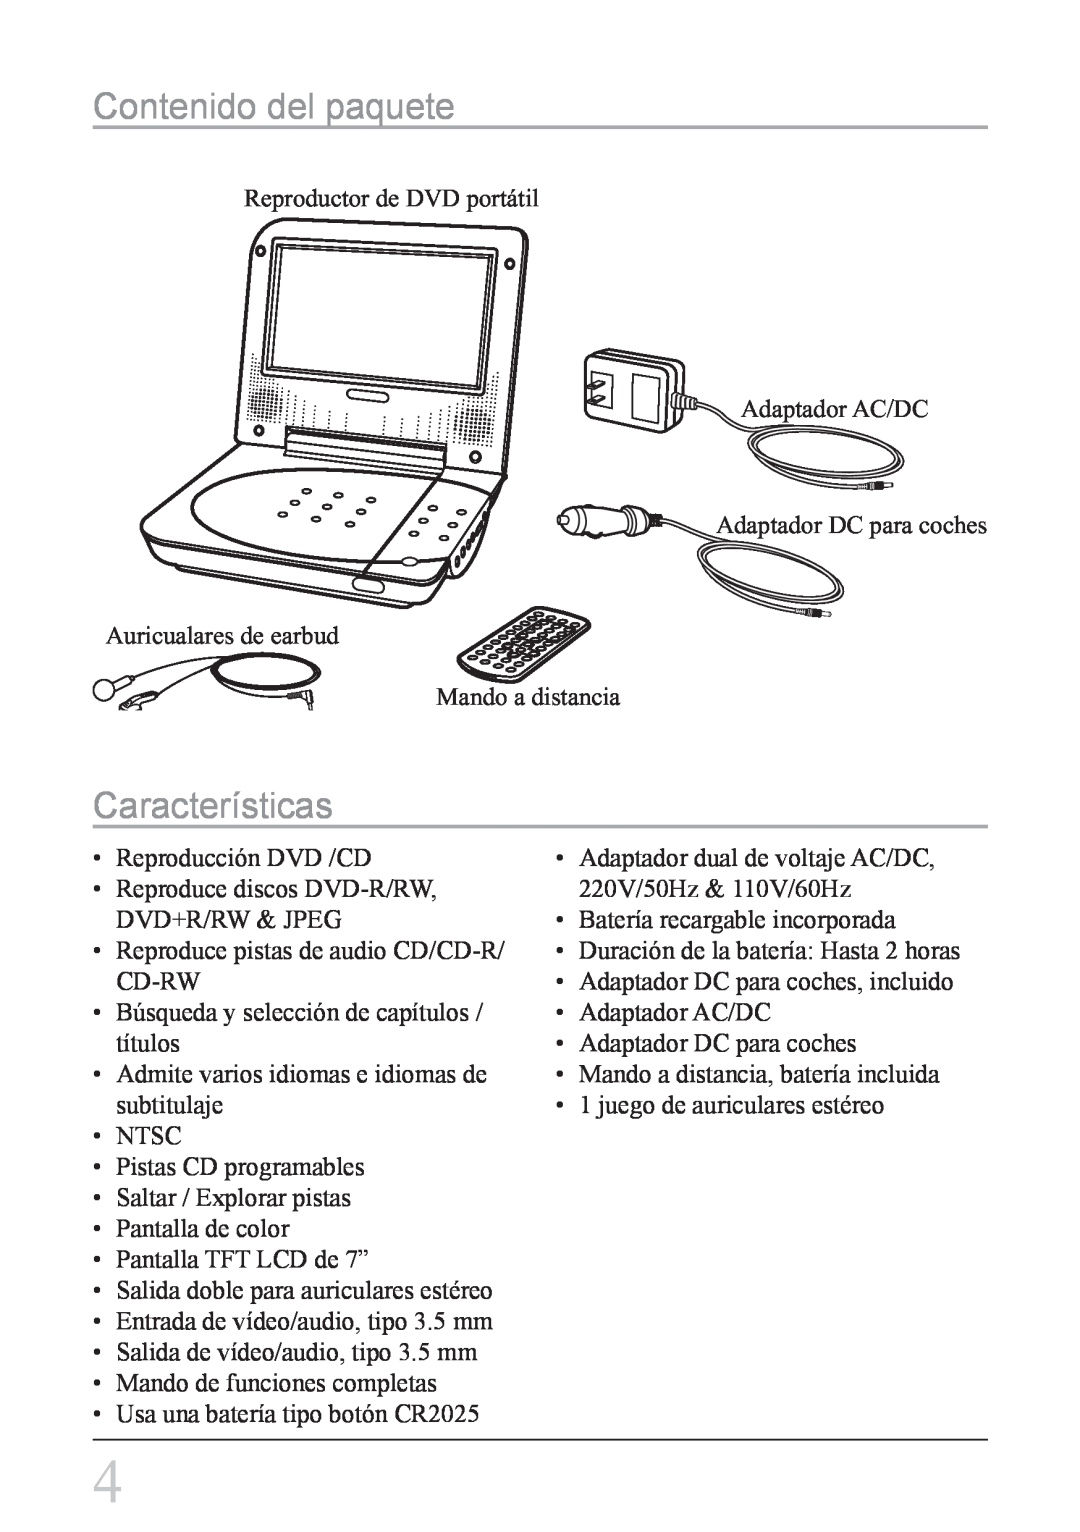 GPX PD708B manual Contenido del paquete, Características 